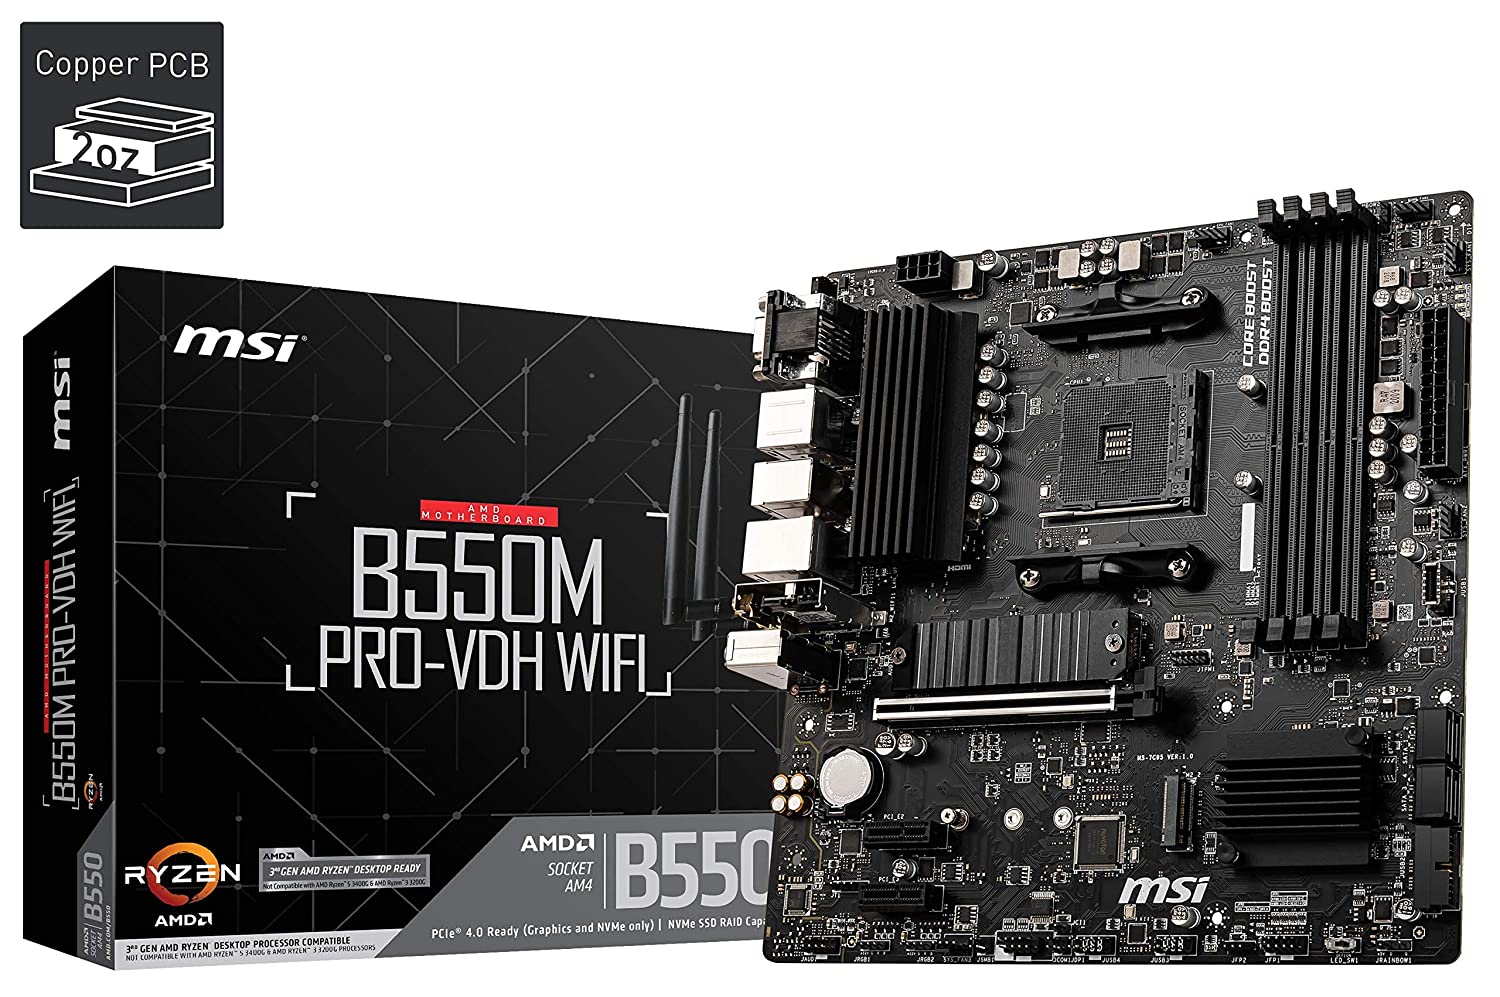 MSI B550M PRO-VDH WiFi DDR4, M.2, USB 3.2 Gen 1, Front Type-C, Wi-Fi, HDMI, Micro ATX Gaming Motherboard AMD Ryzen™ 5000 Series Desktop Processors